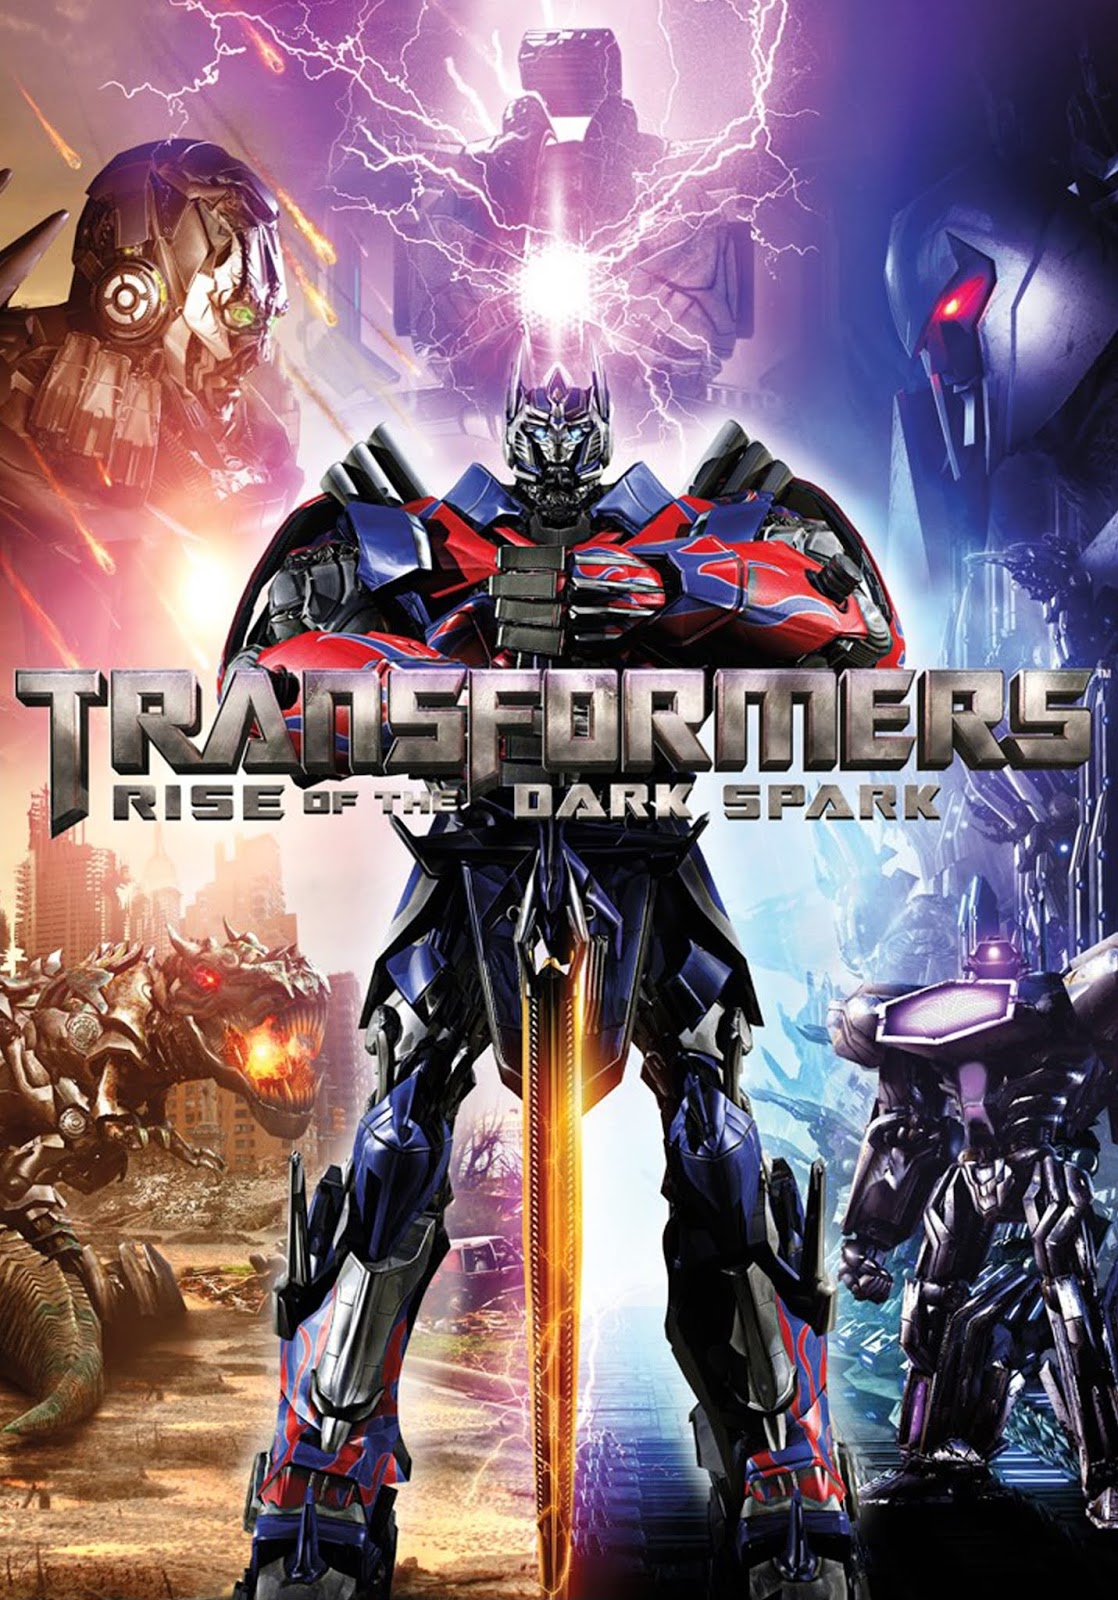 Transformers rise of dark spark steam фото 35